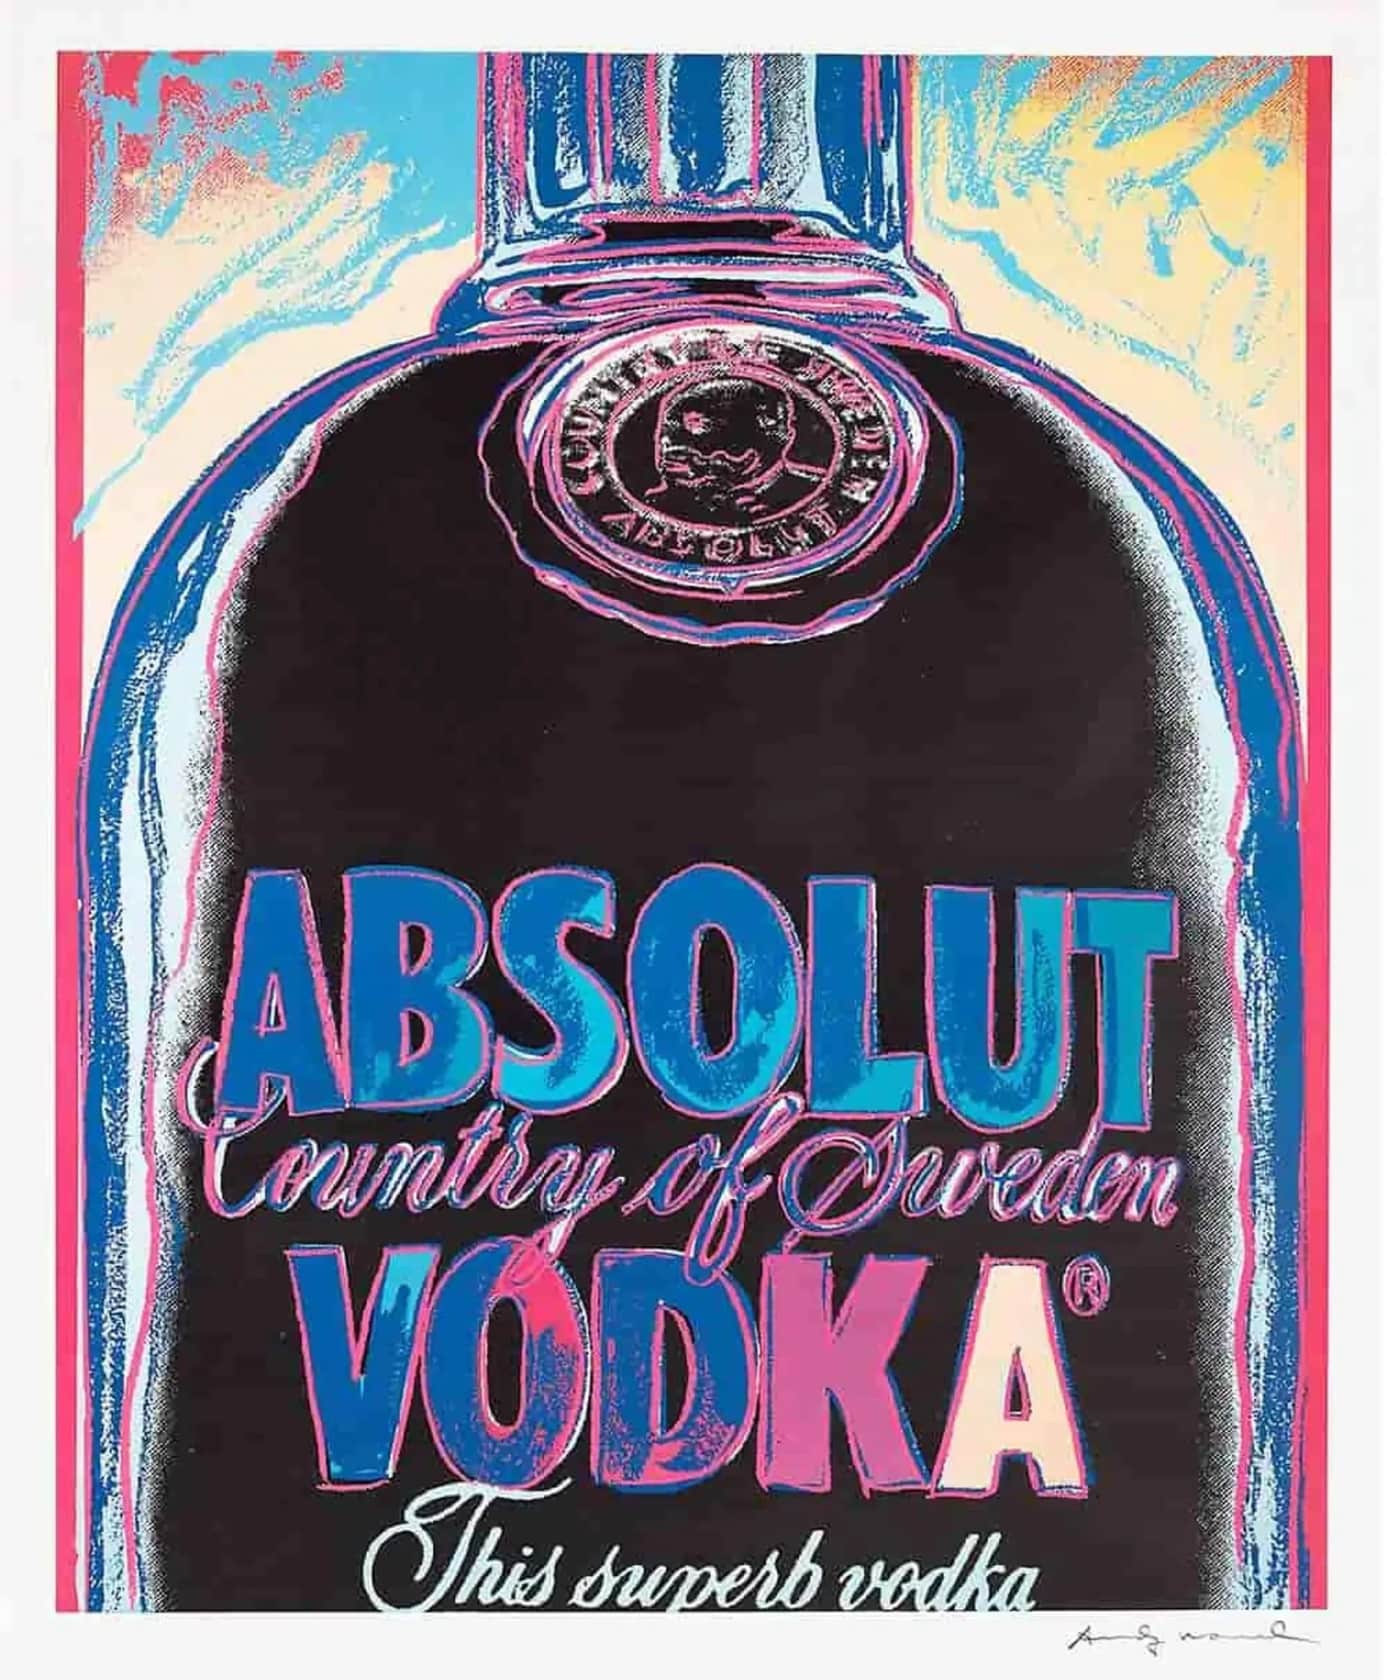 Andy Warhol, Absolut Vodka, 1985